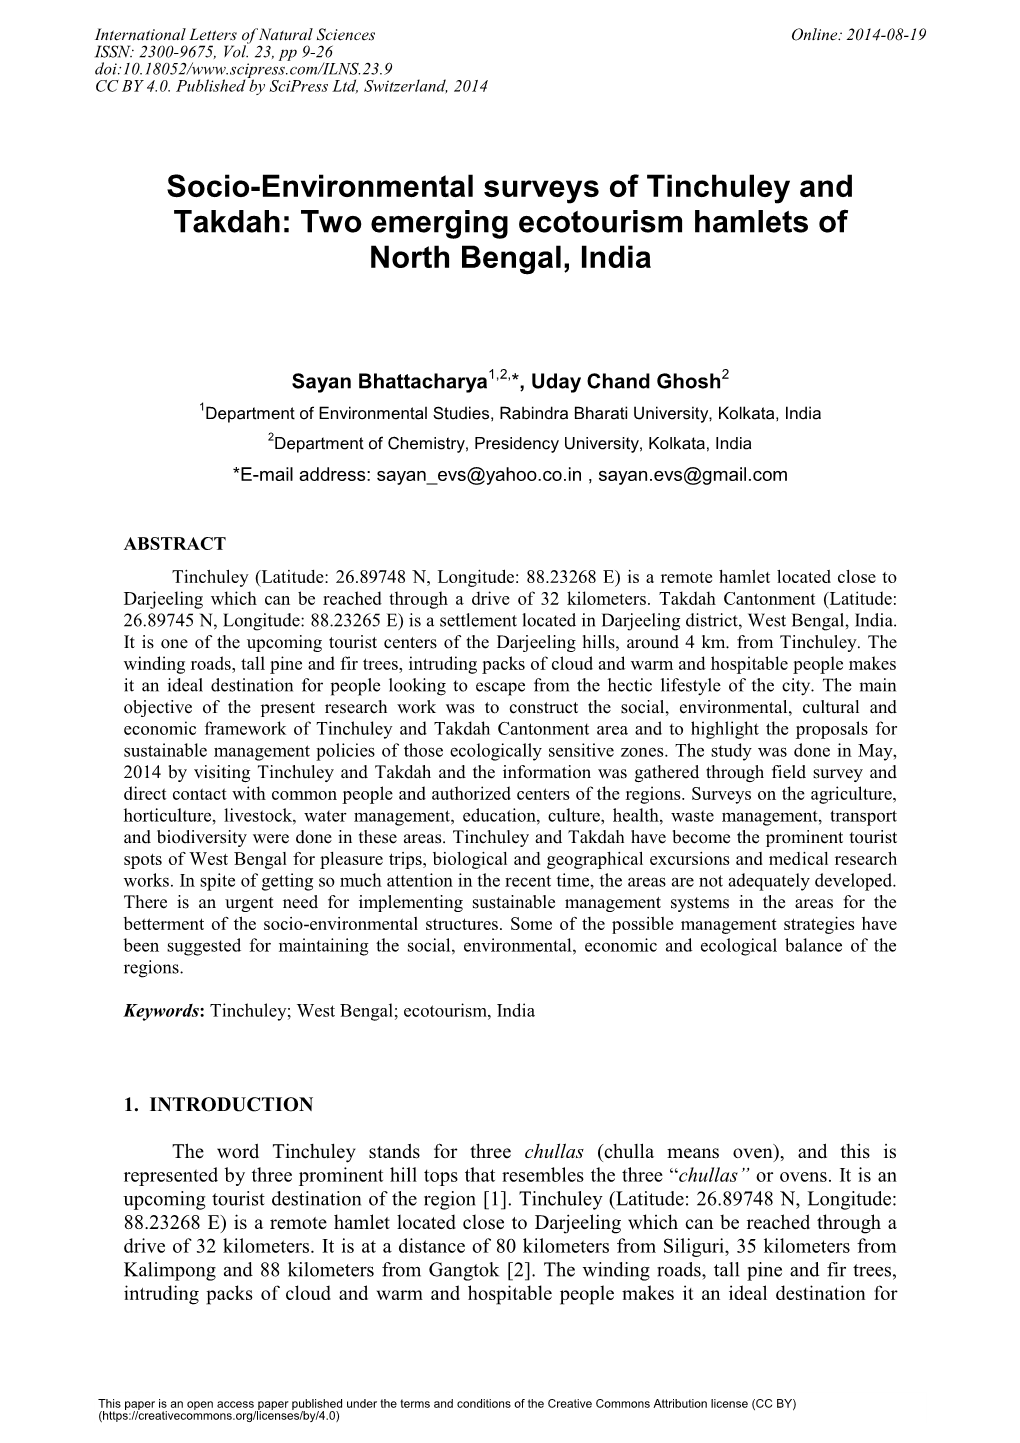 Socio-Environmental Surveys of Tinchuley and Takdah: Two Emerging Ecotourism Hamlets of North Bengal, India